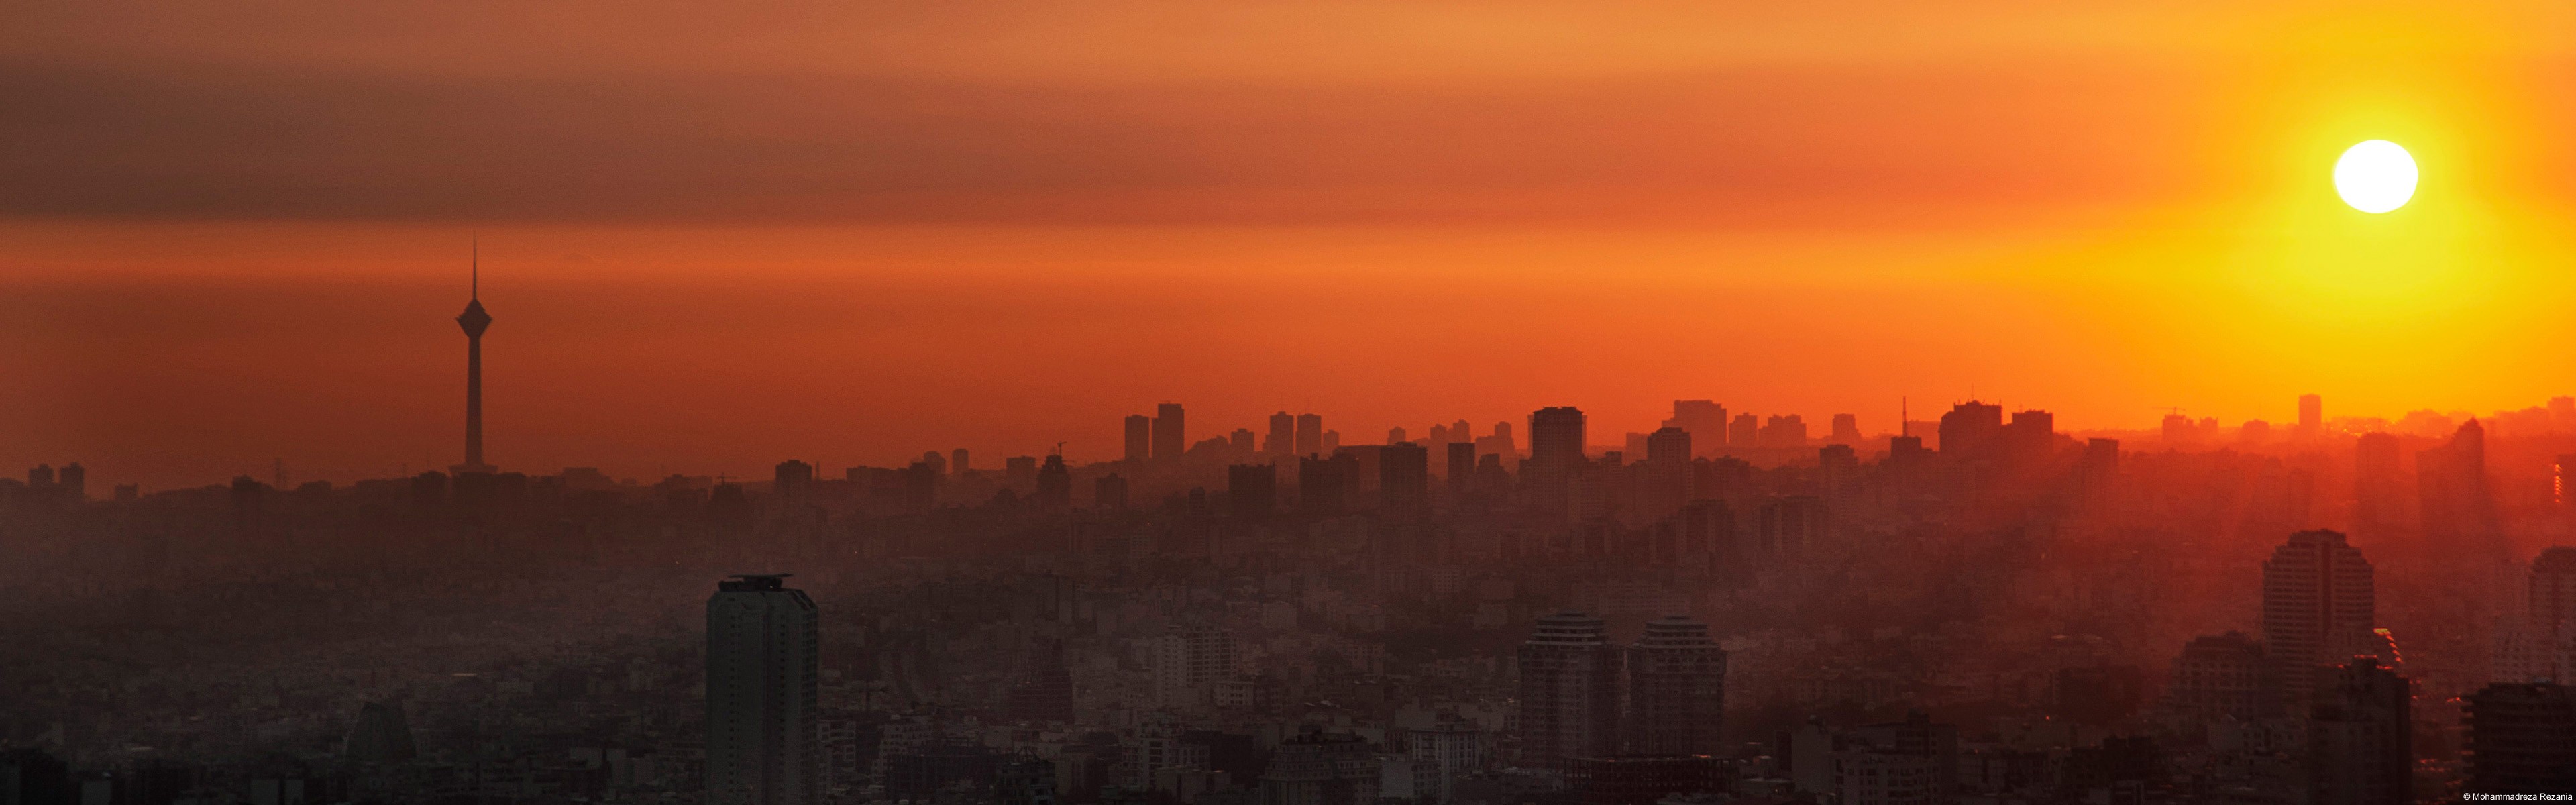 General 3840x1200 Iran Tehran city tower sunset cityscape